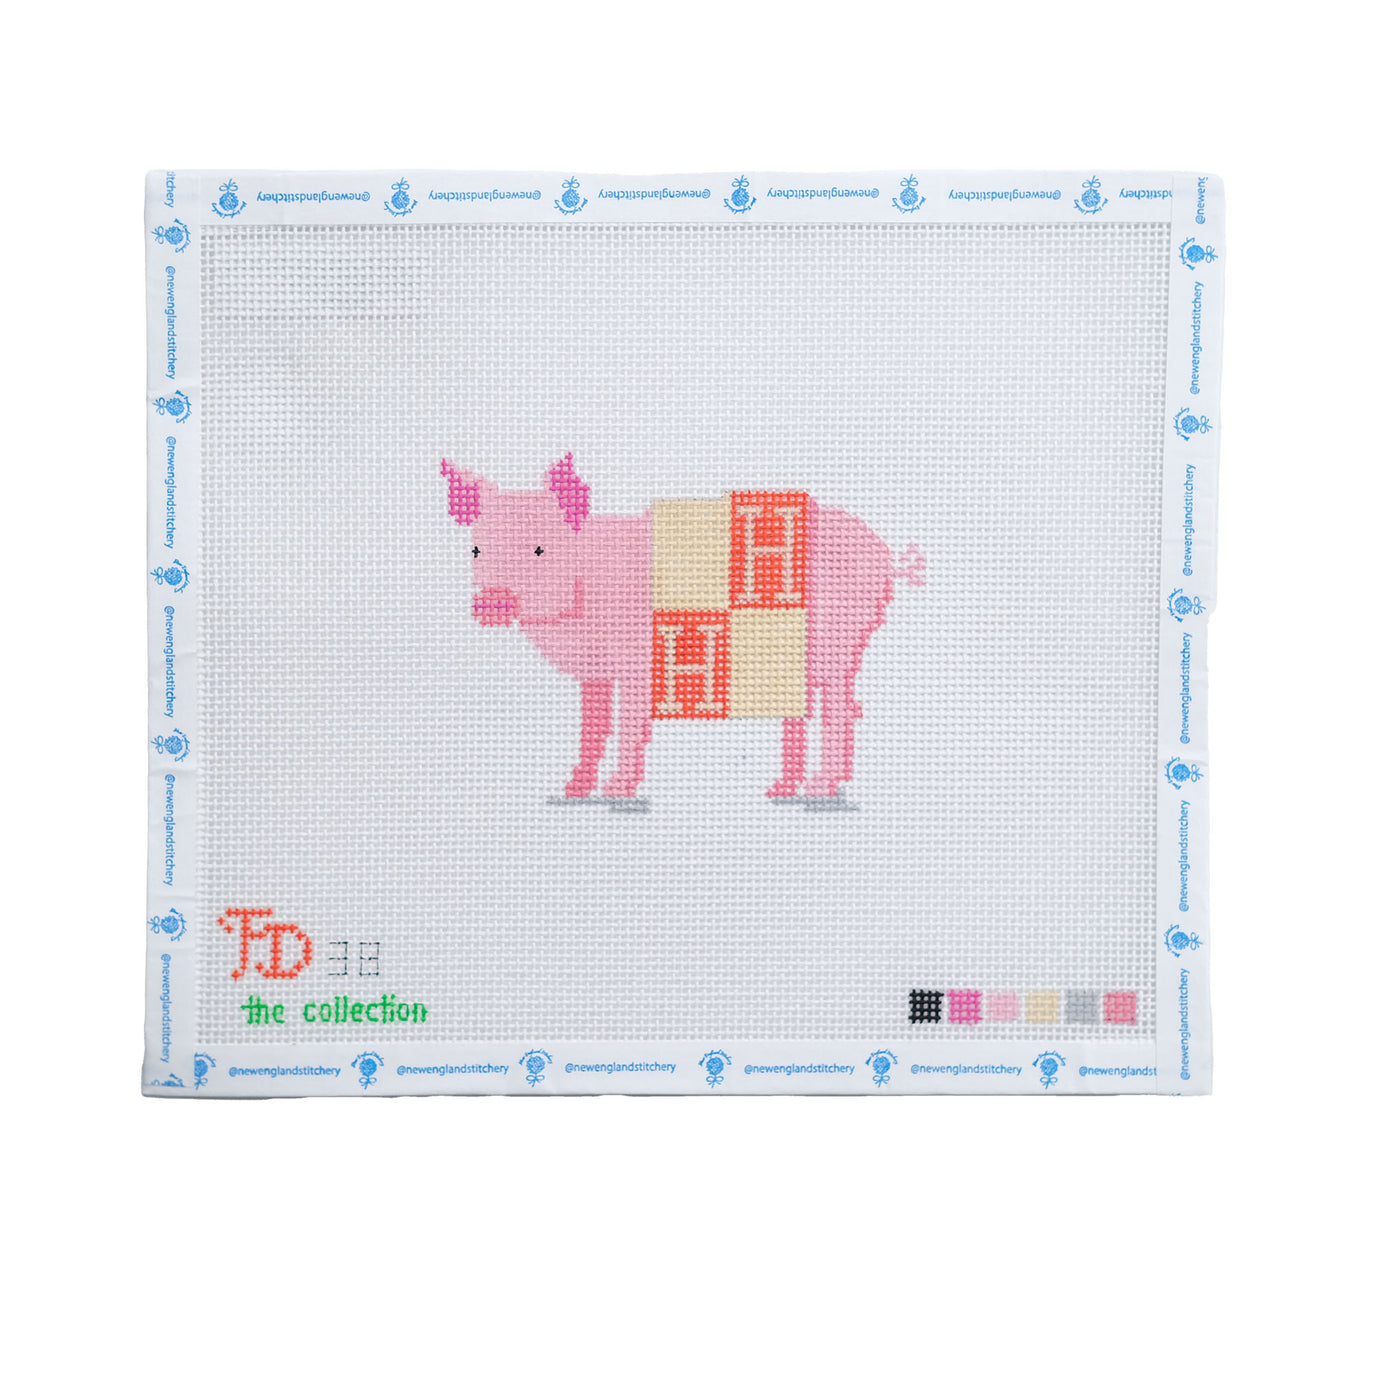 Pig in a H Blanket